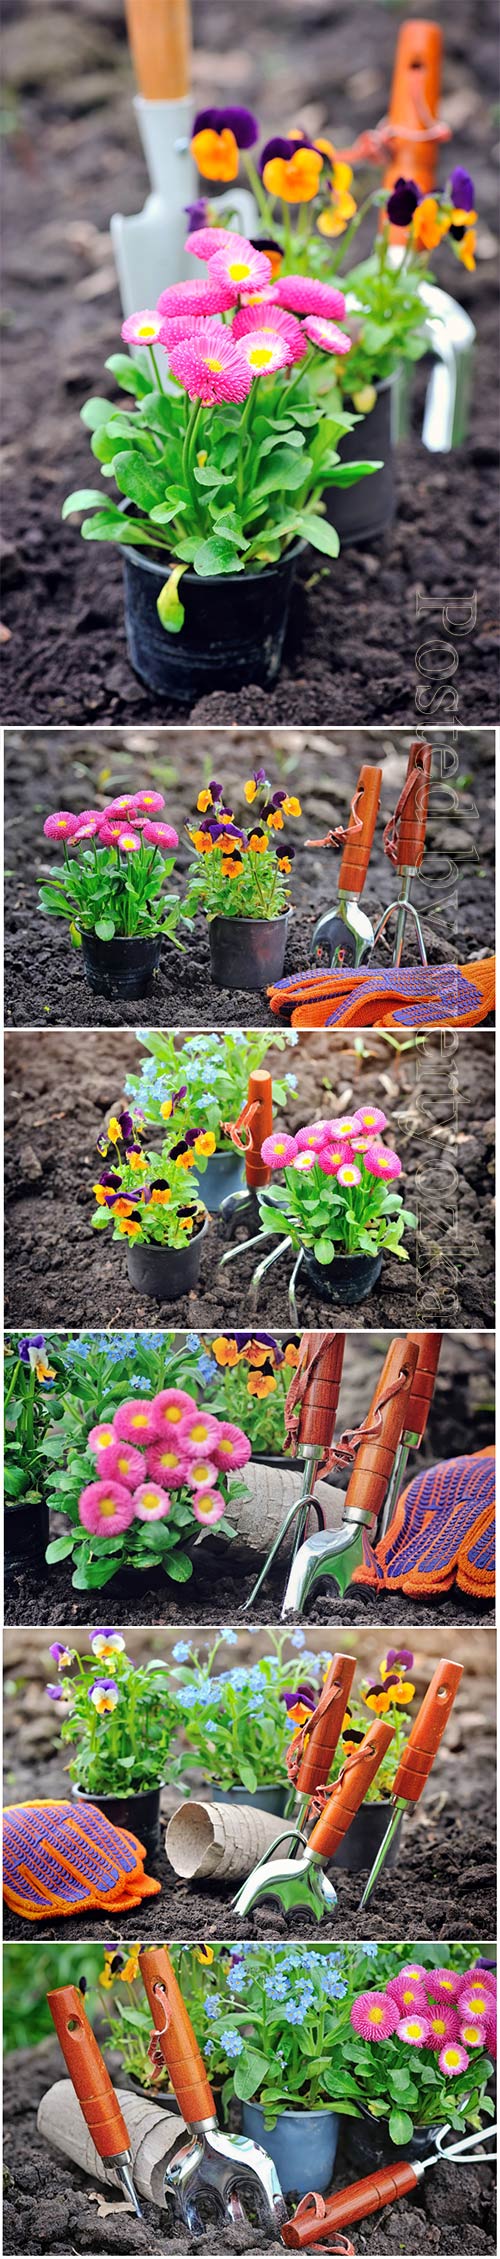 Gardening, flower planting beautiful stock photo